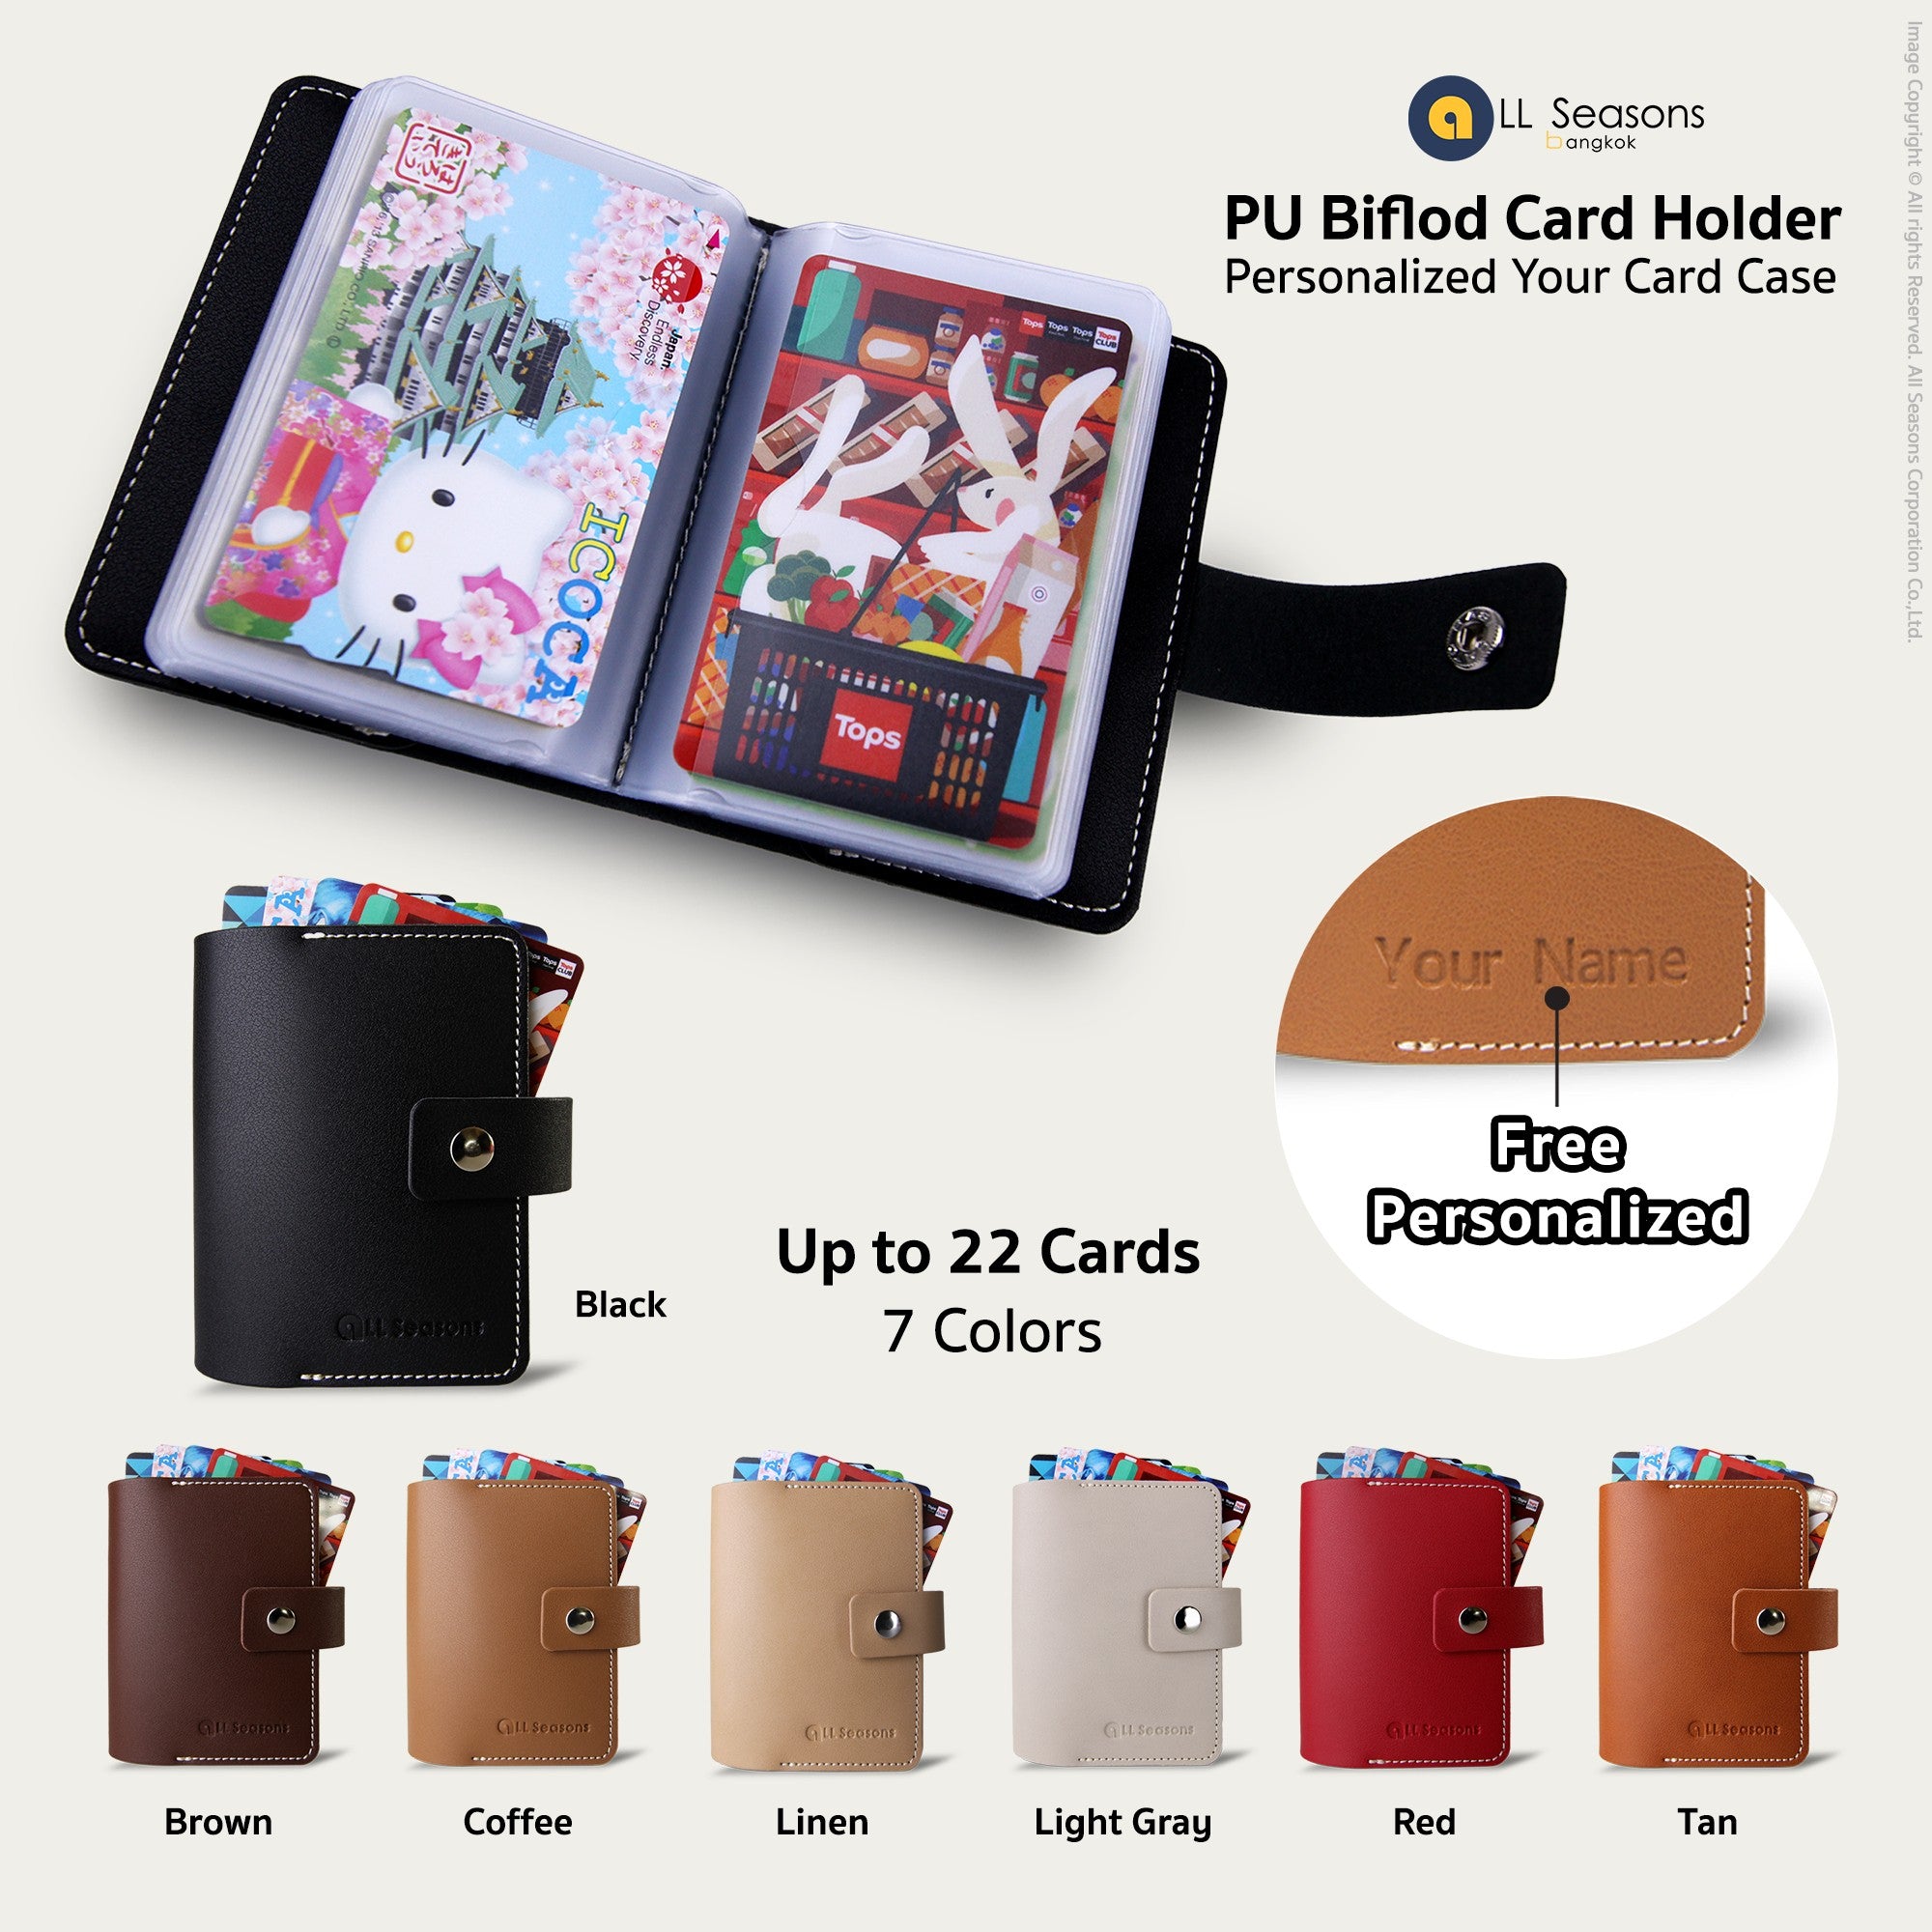 Personalized PU Bifold Card Holder V.1